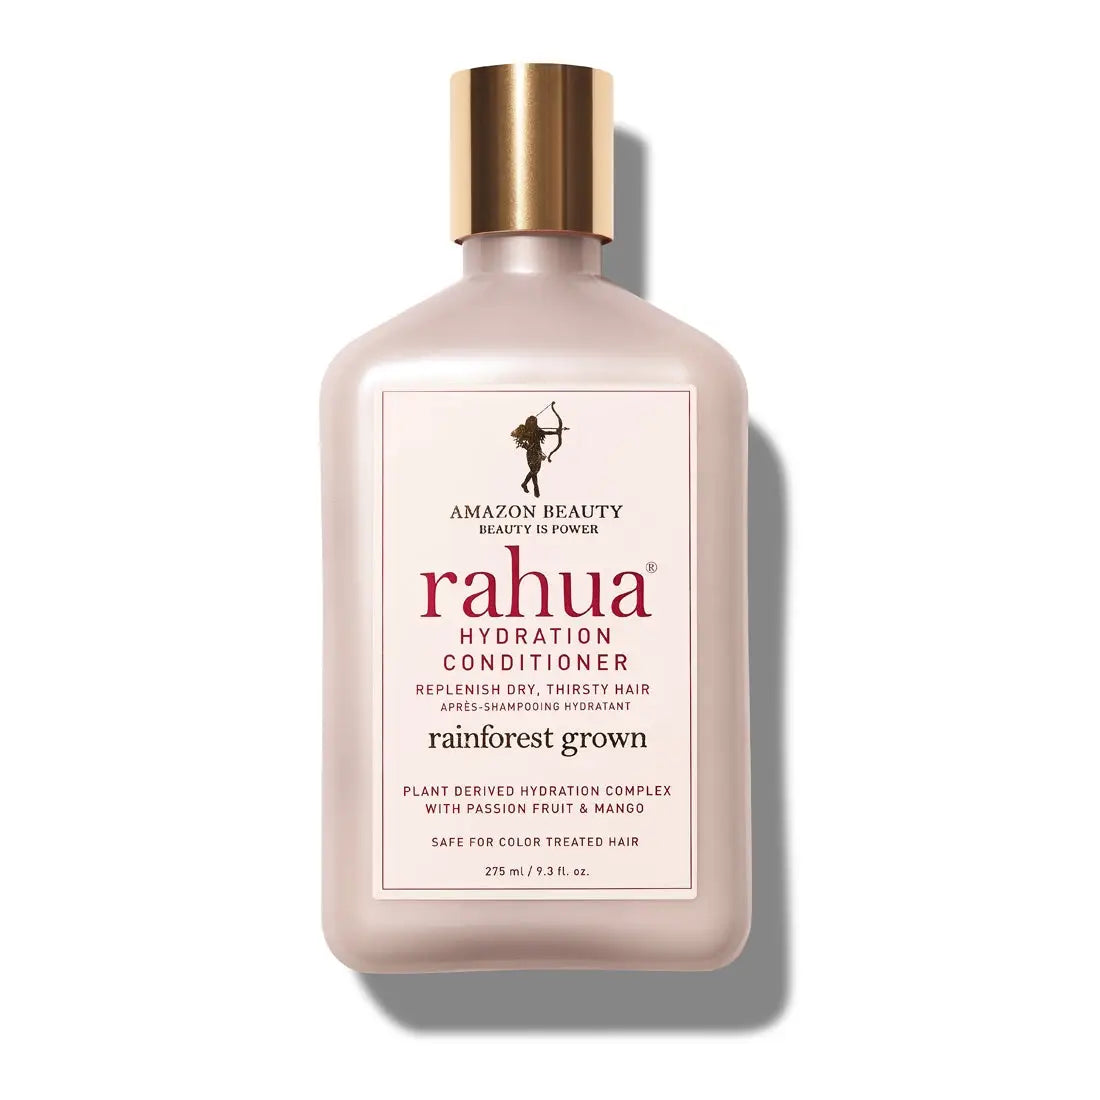 Rahua Hydration Conditioner 275ml - Free Shipping Worldwide